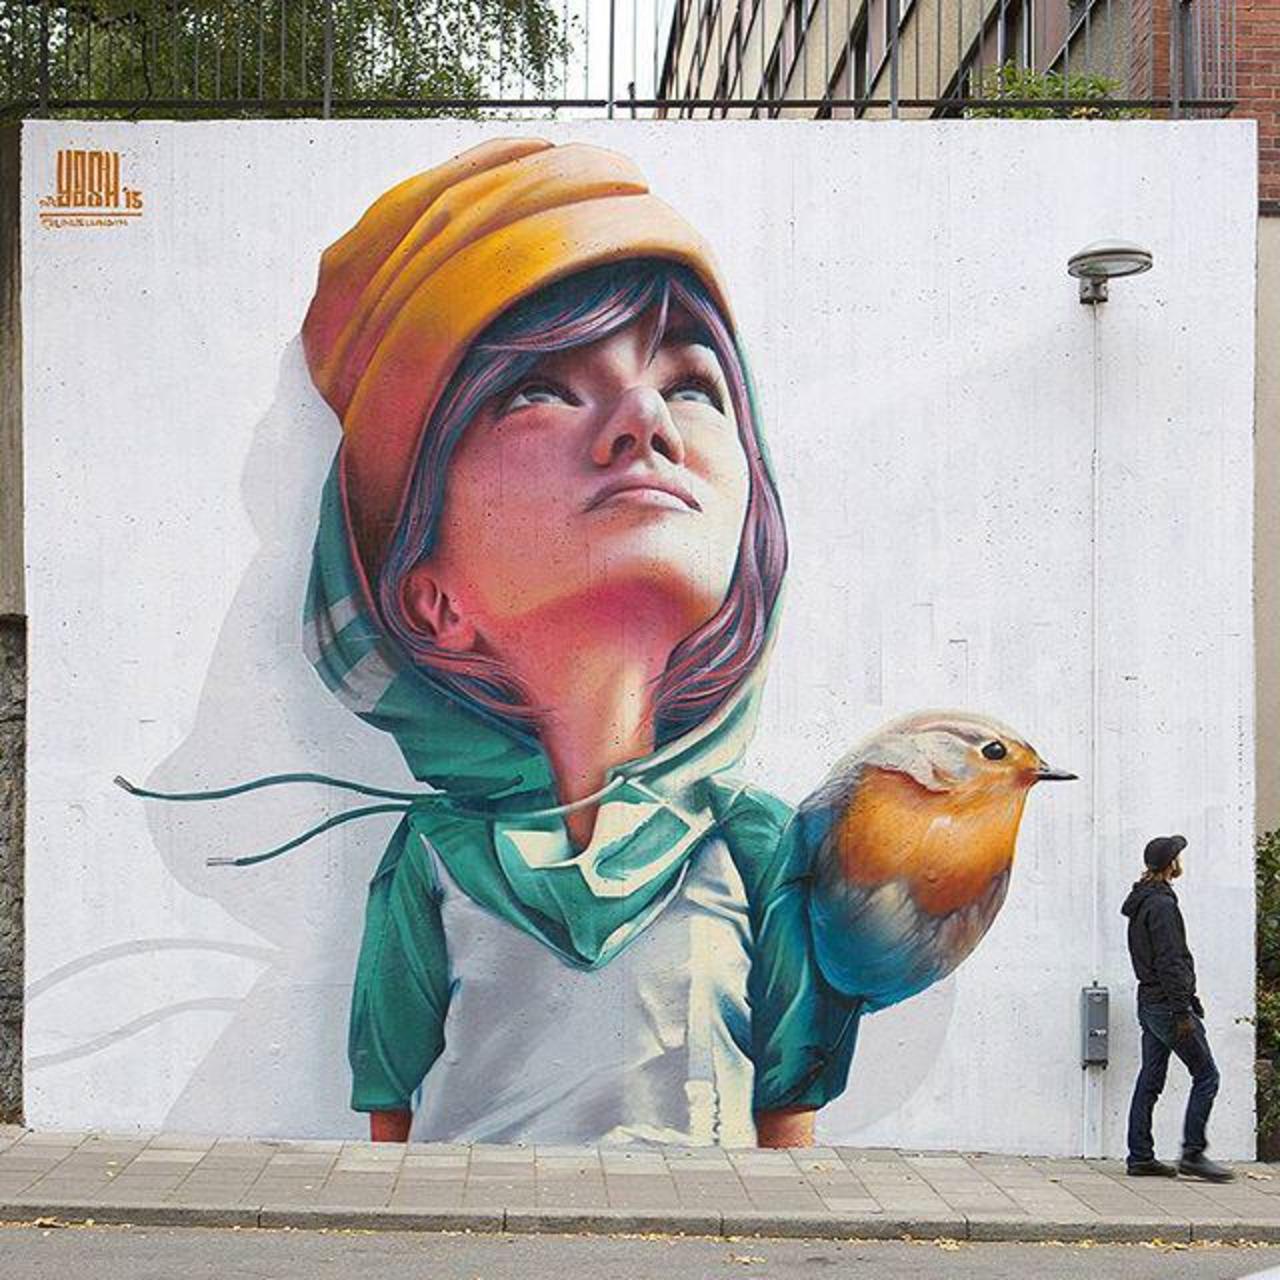 RT @cakozlem76: Yash #streetart #urbanart #graffiti http://t.co/GguTiIcLk1